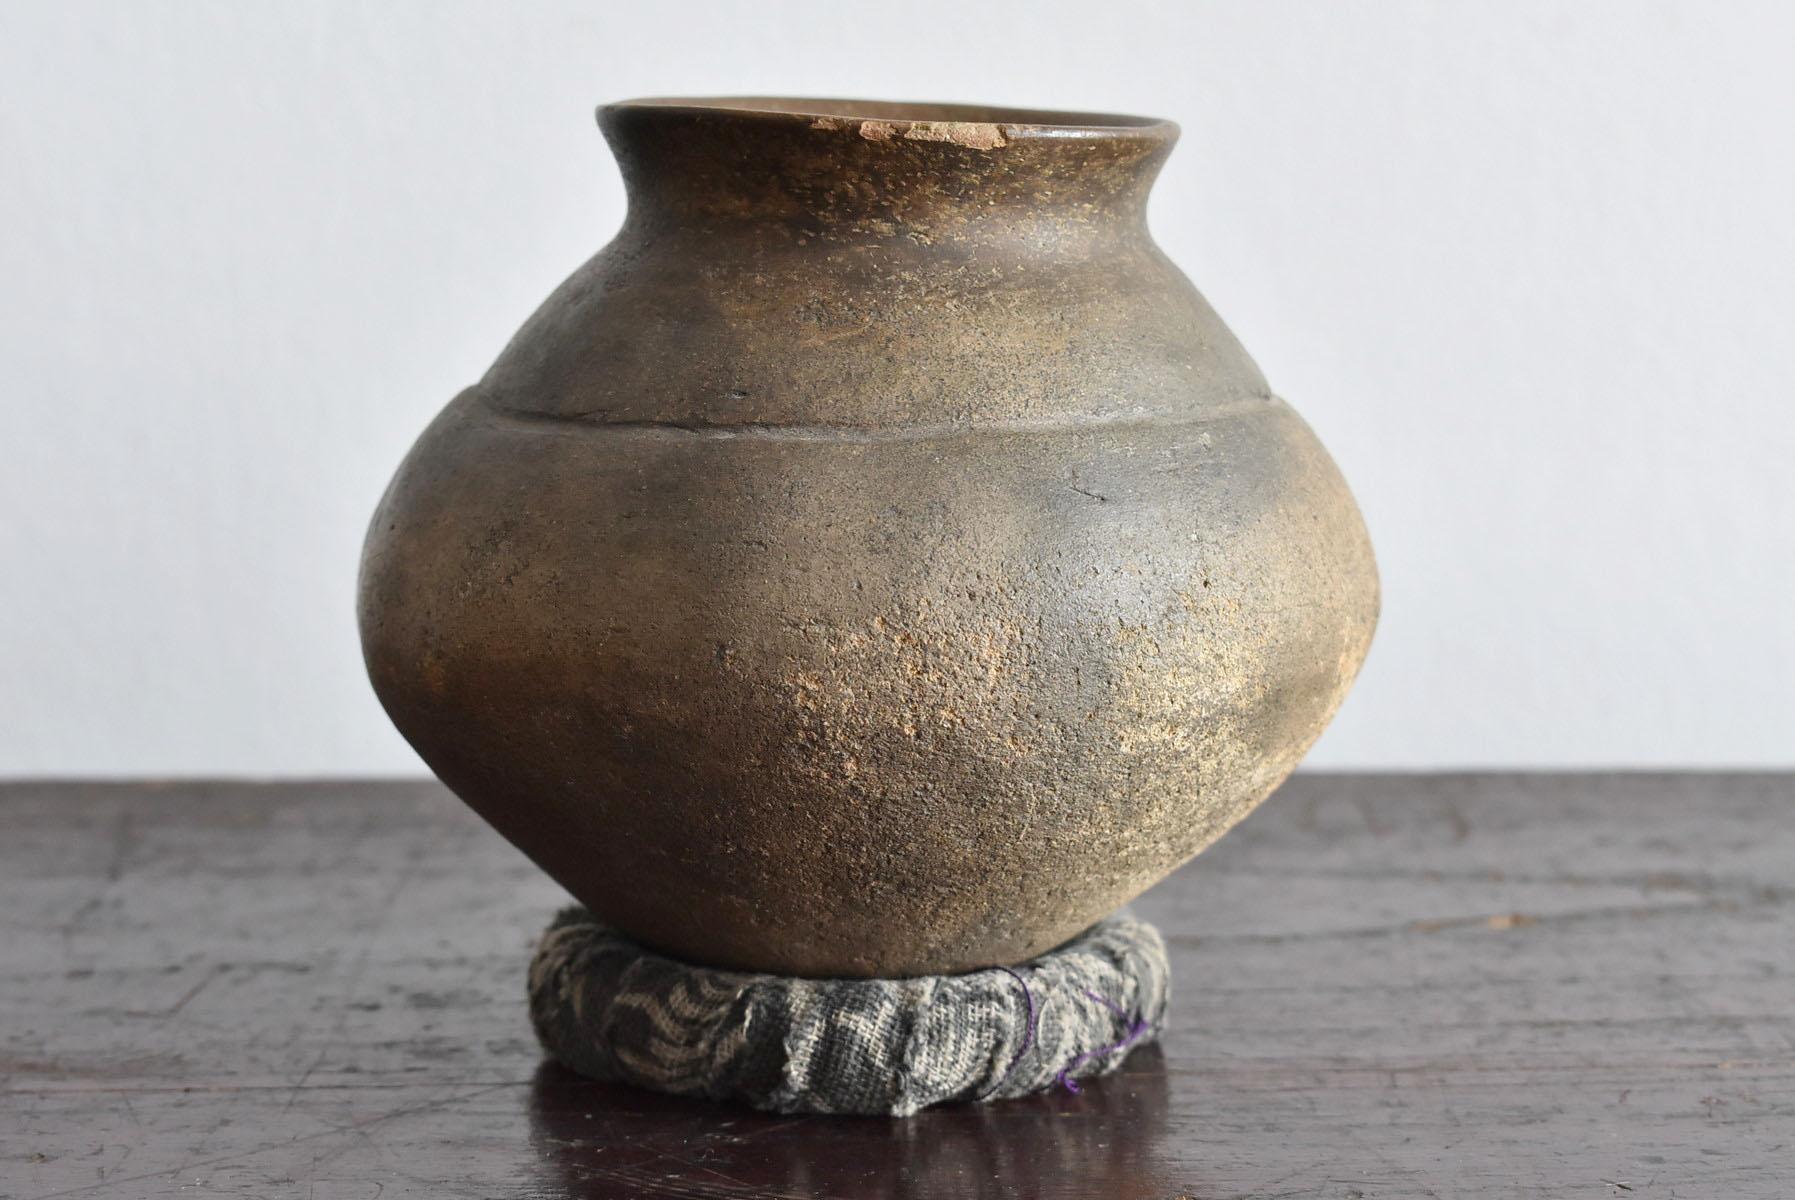 Unglazed Japanese Ancient Small Jar / Jomon Pottery / 3000 Years ago / Wabi-Sabi